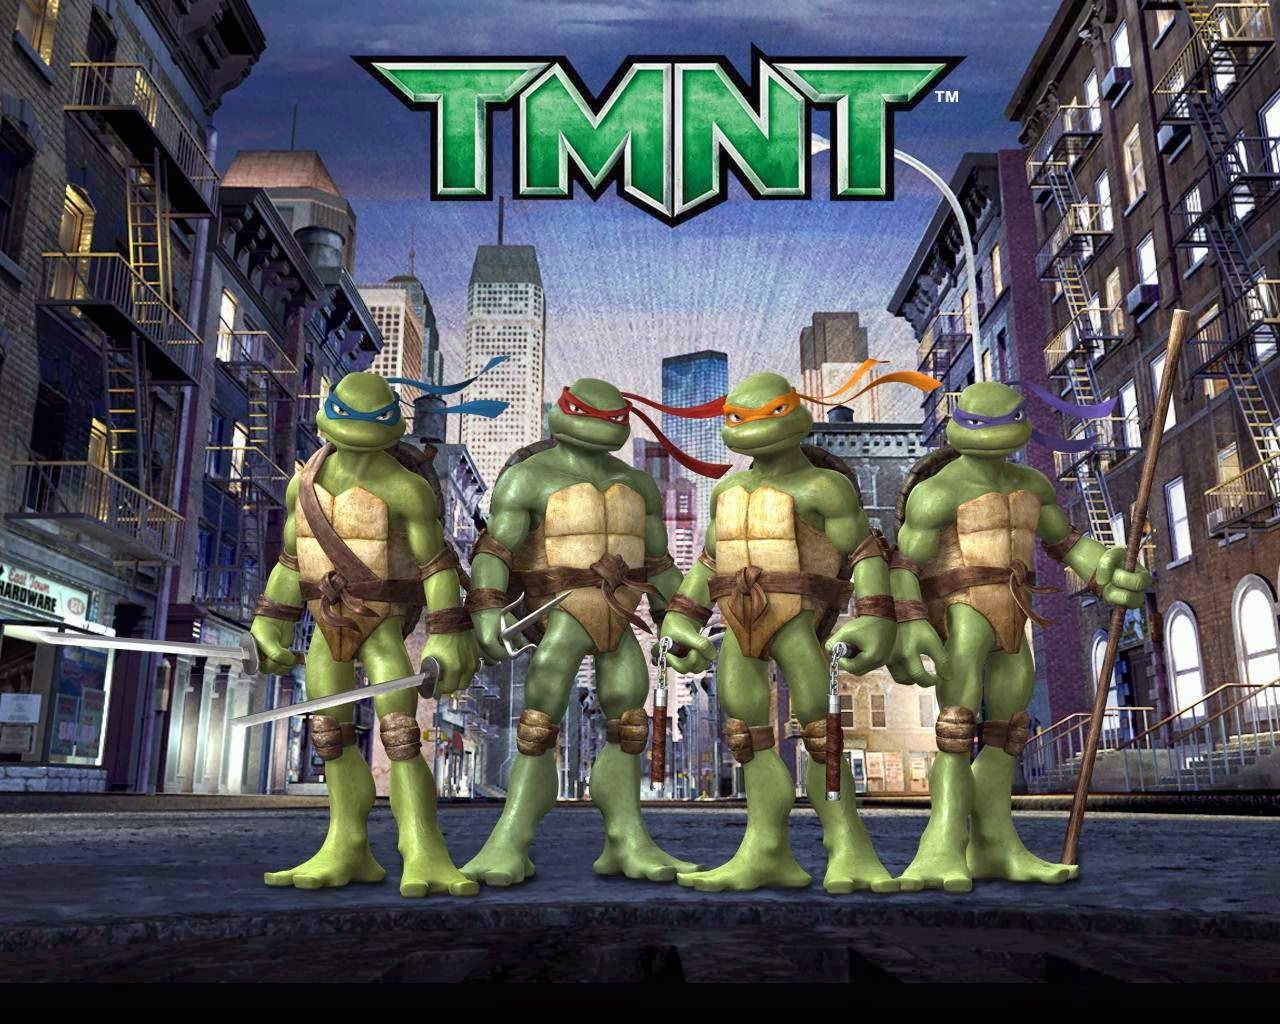 Teenage Mutant Ninja Turtles wallpapers | Nice Pics Gallery